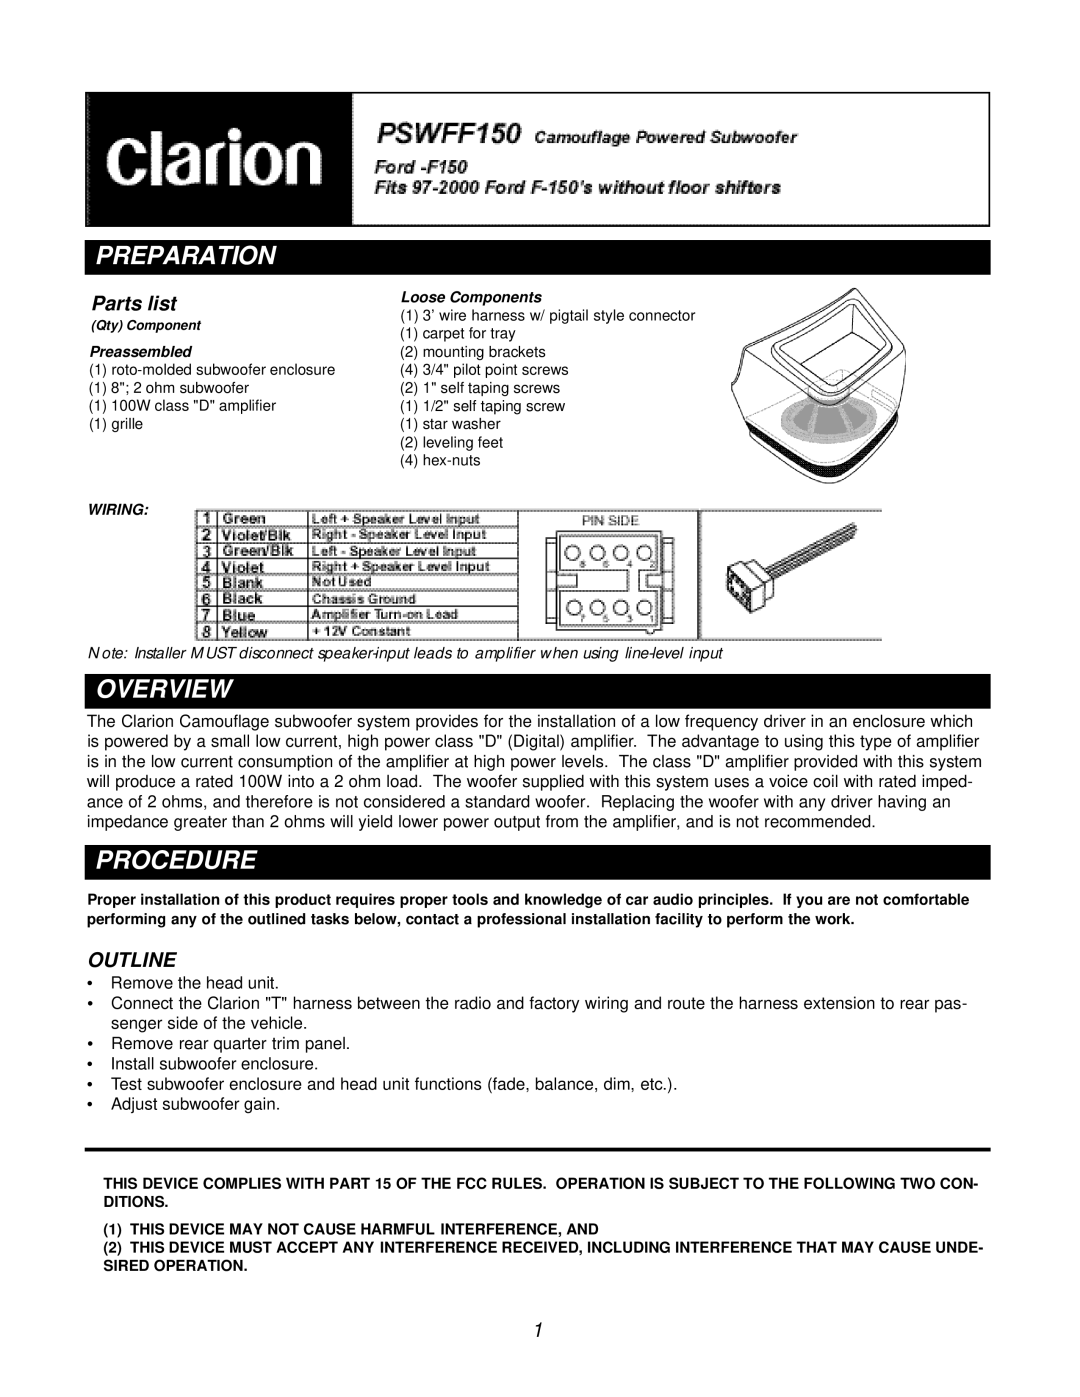 Clarion PSWFF150 manual Preparation, Overview, Procedure, Parts list, Outline 